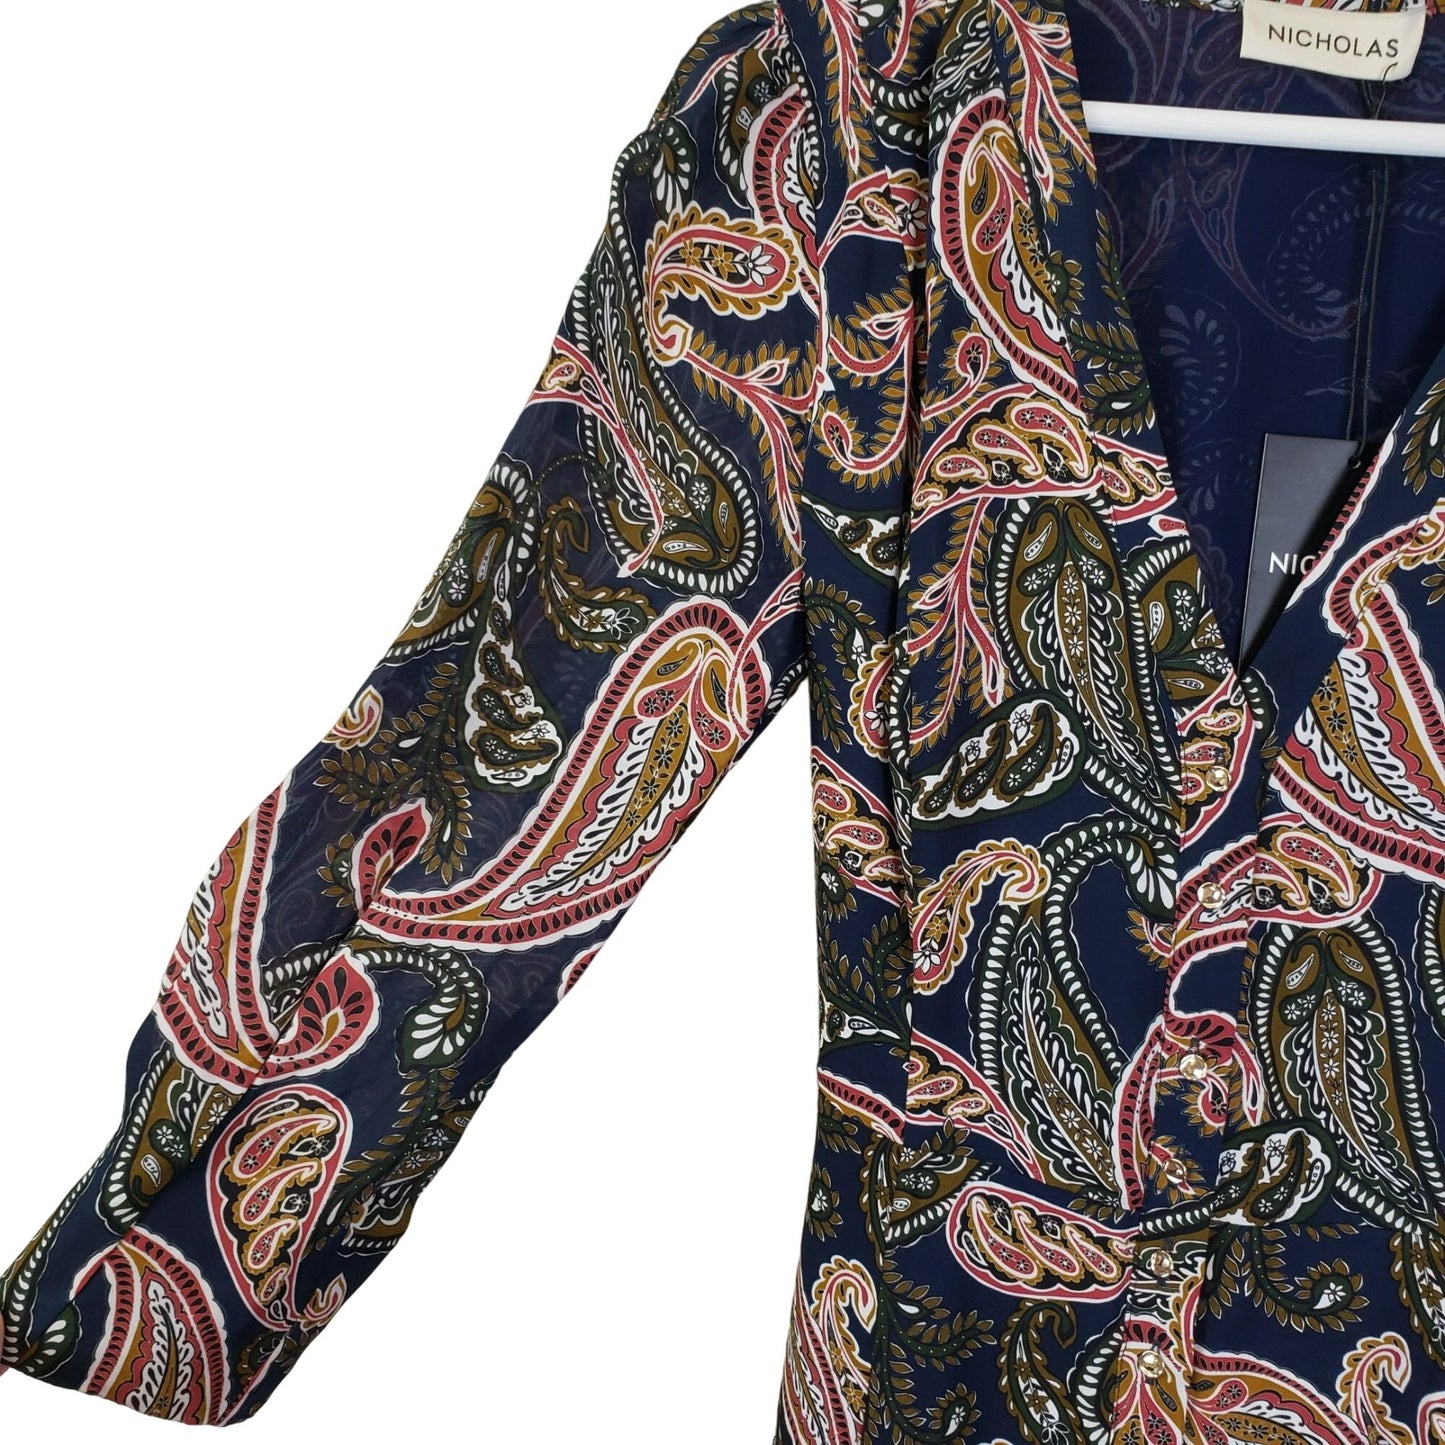 NWT Nicholas 100% Silk Noura Jaipur Paisley Print Maxi Dress in Midnight Size 4